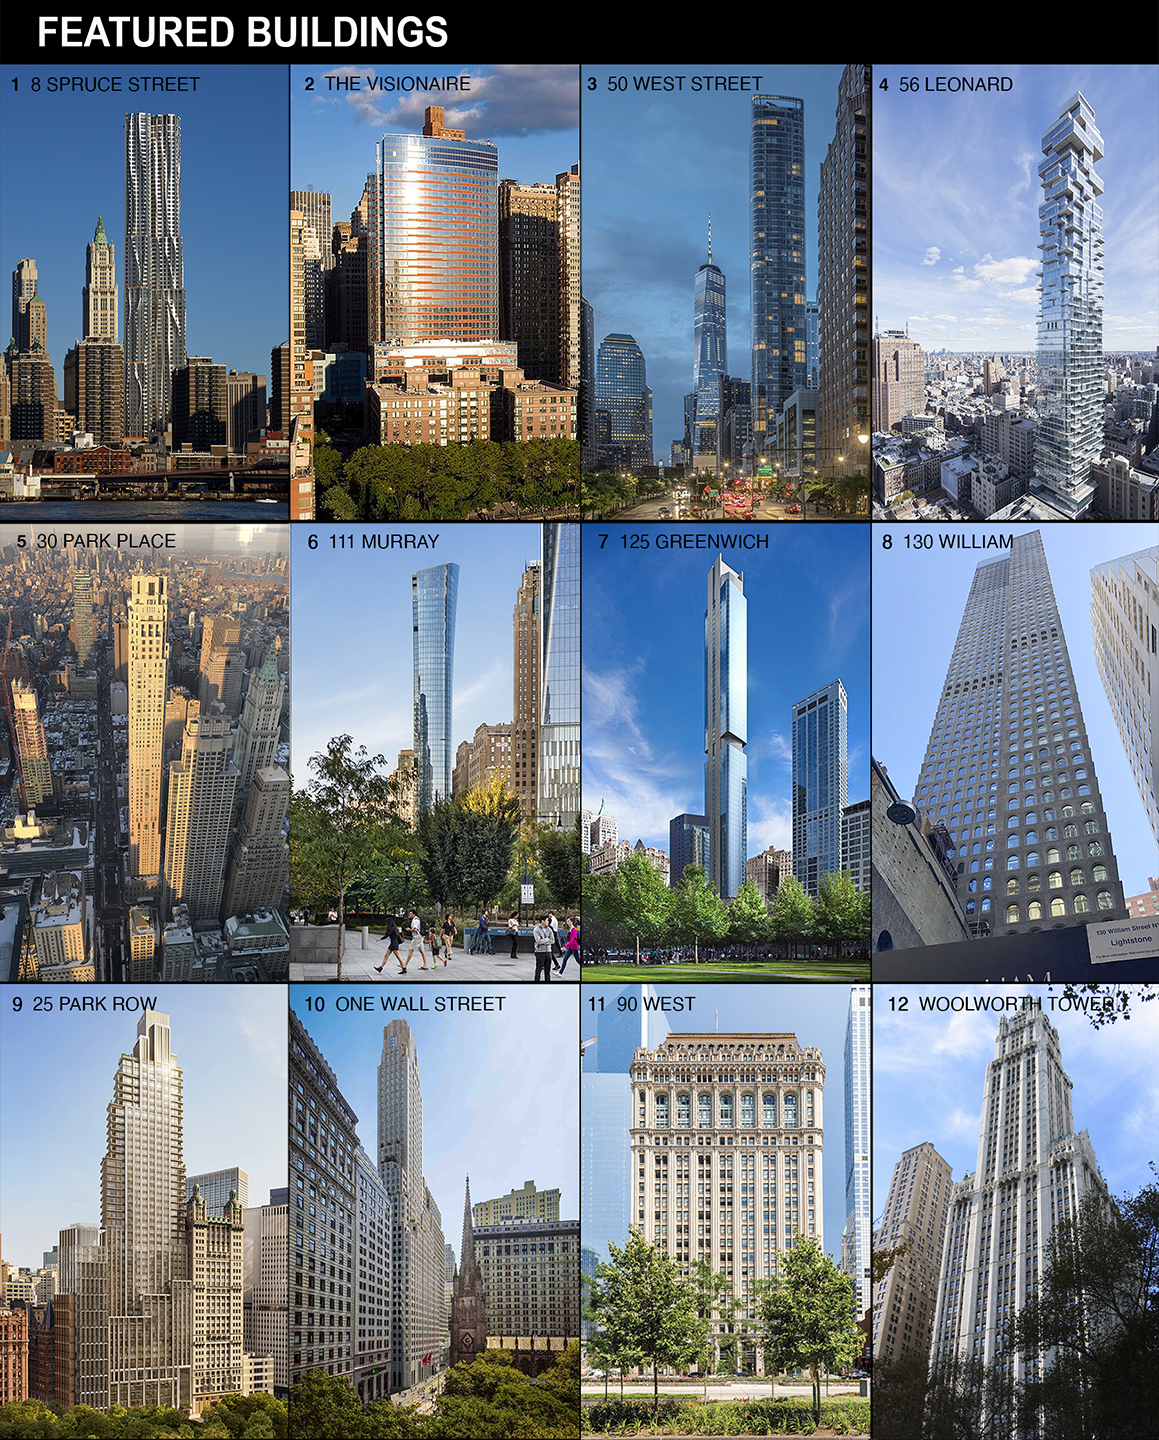 Beekman Tower, Location: New York NY, Architect: Frank Gehry